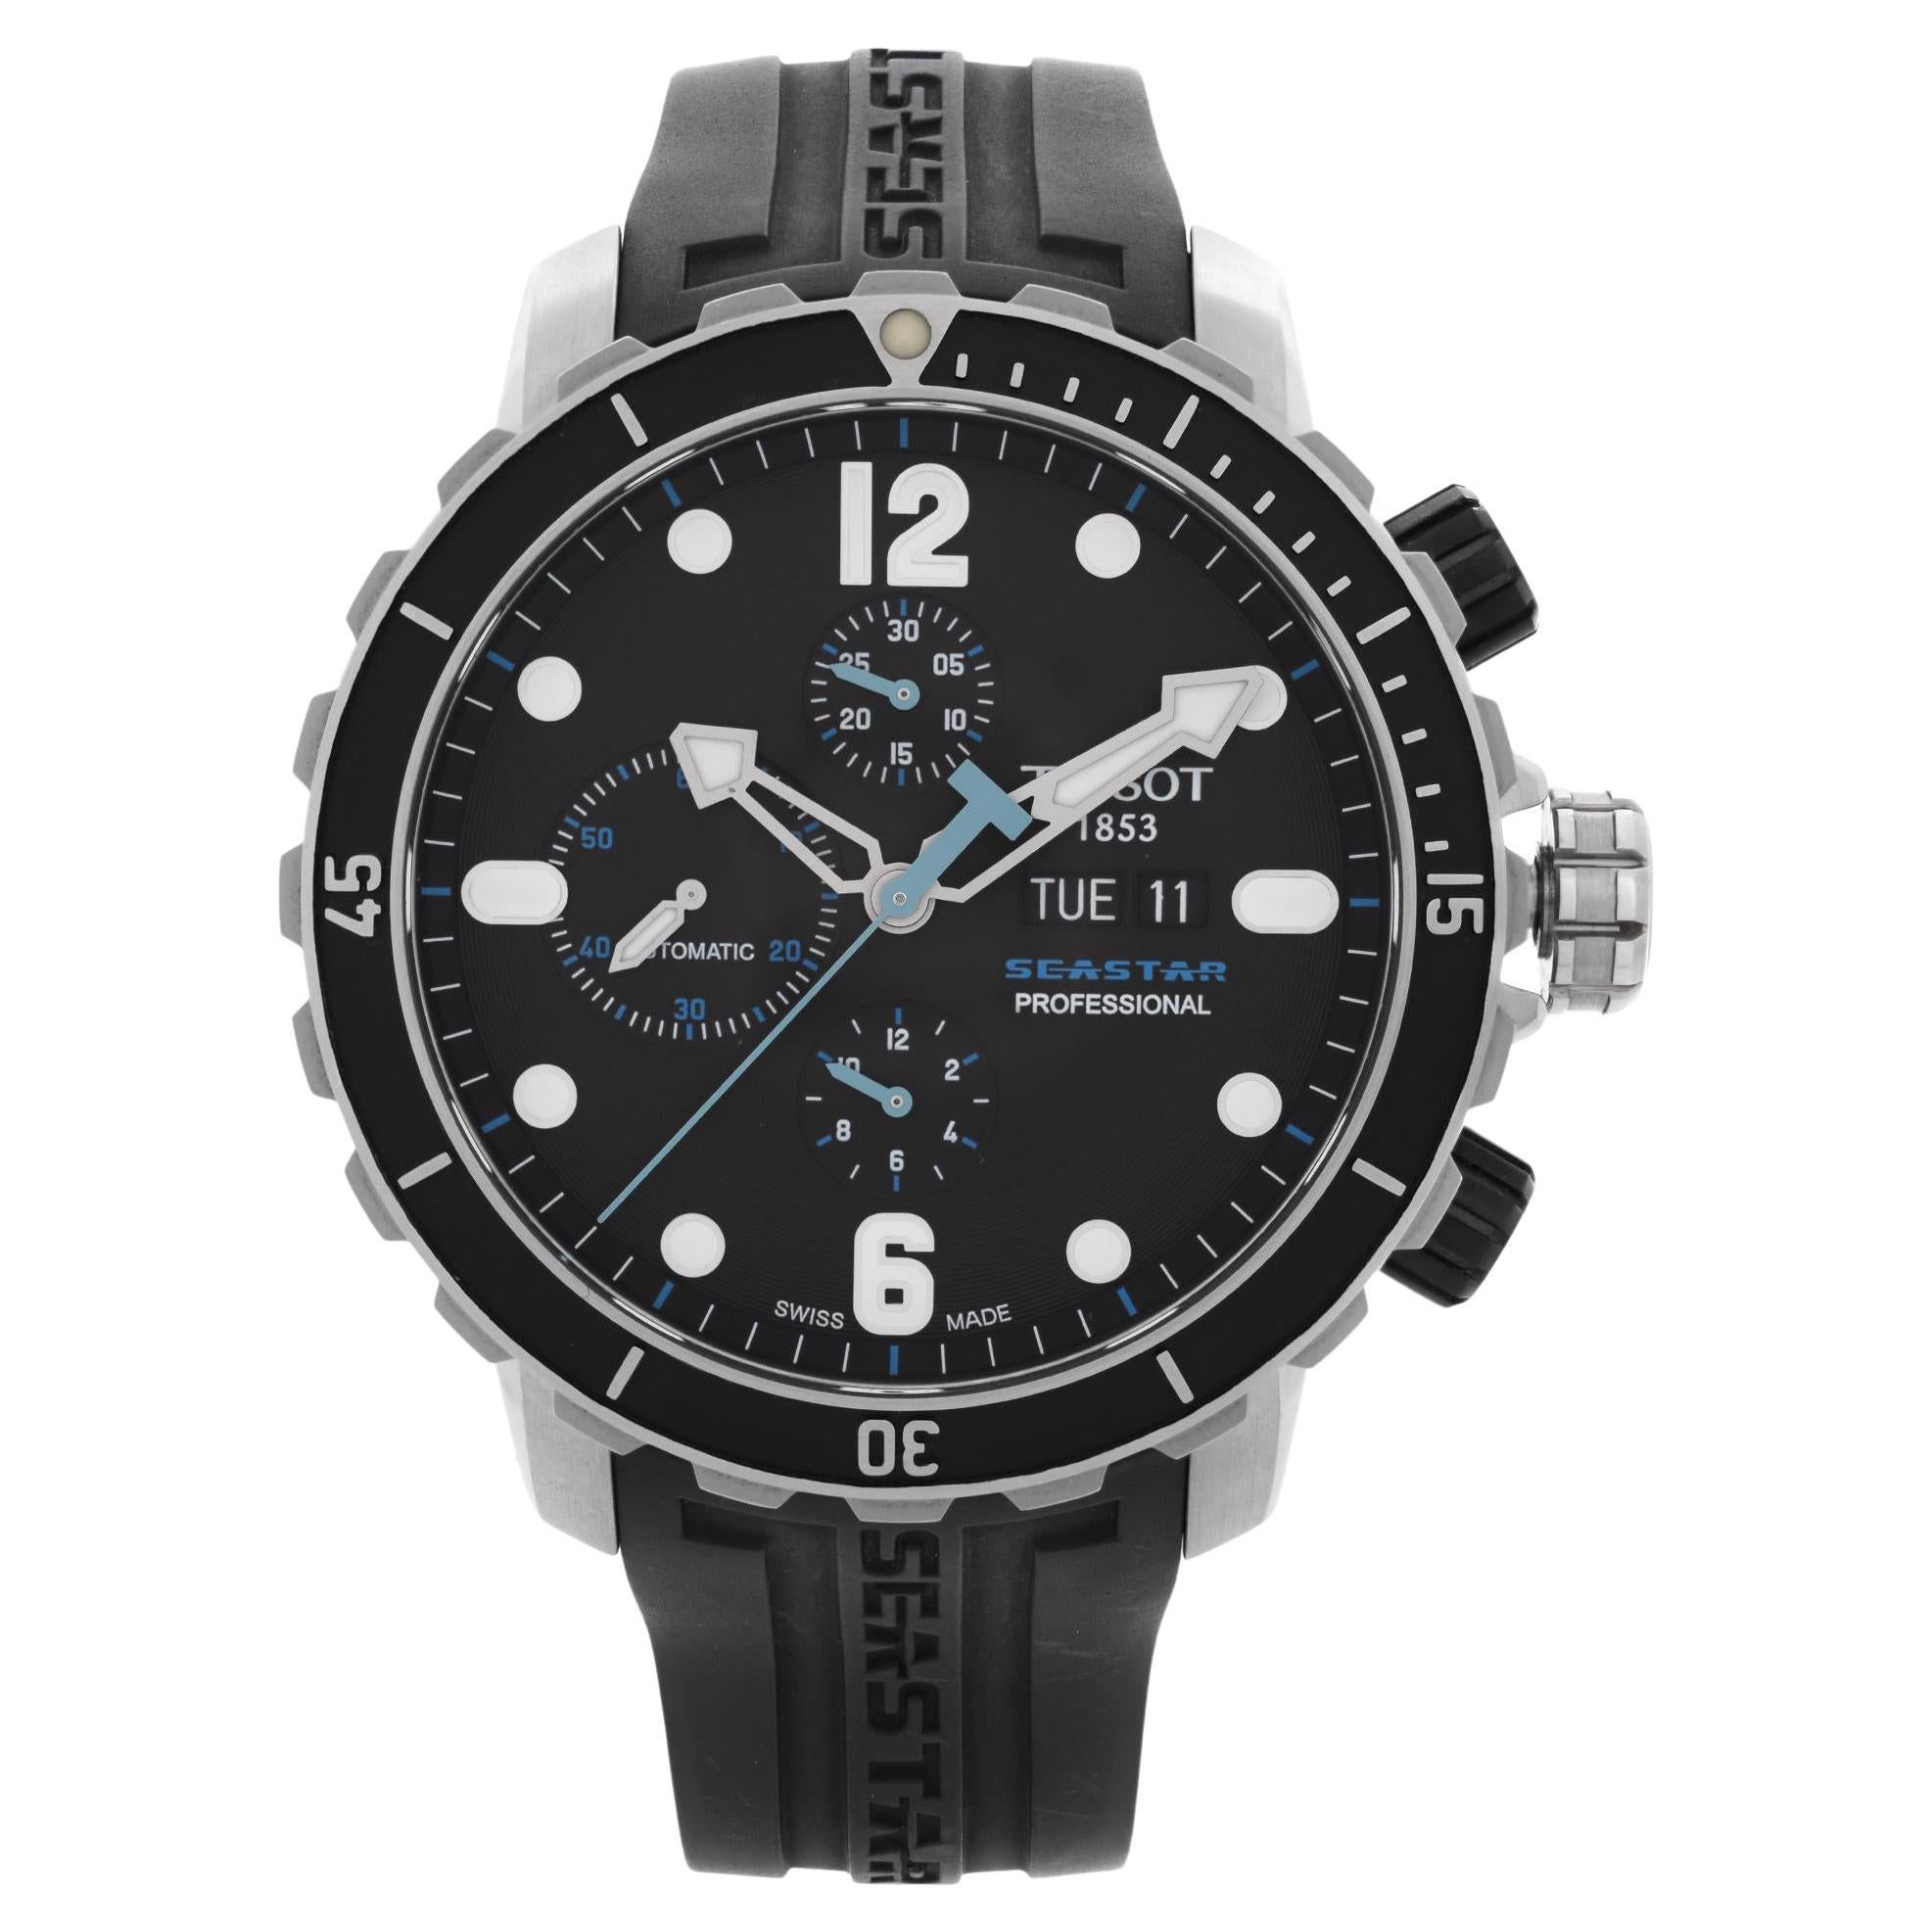 Tissot Seastar 1000 Limited Steel Black Dial Automatic Watch T066.414.17.057.00